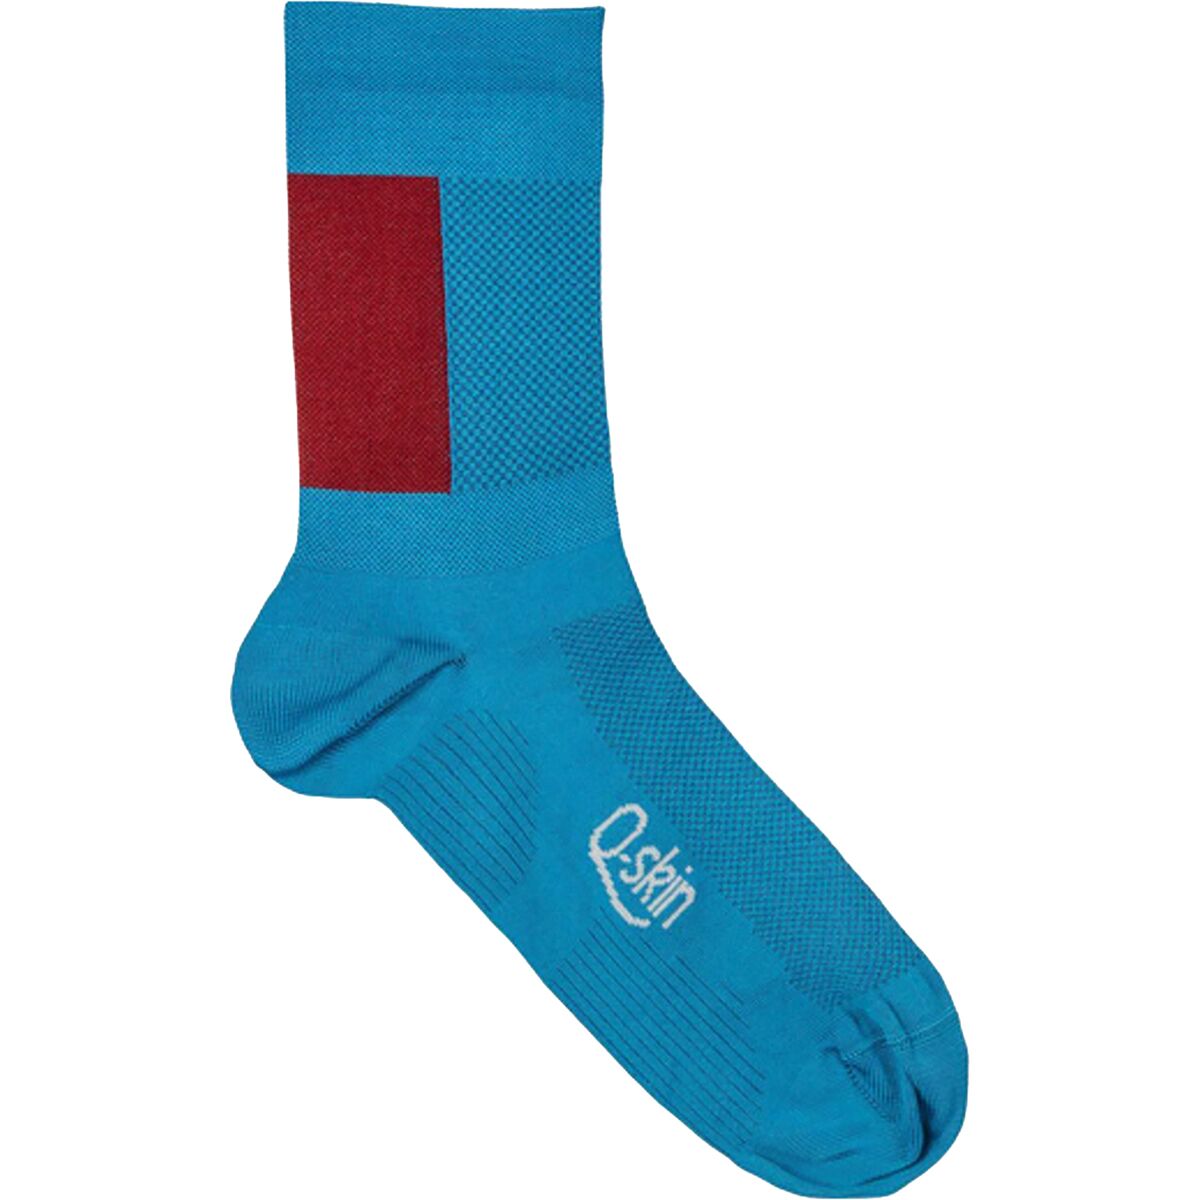 Sportful Snap Sock Berry Blue/Cayenna Red, M/L - Men's